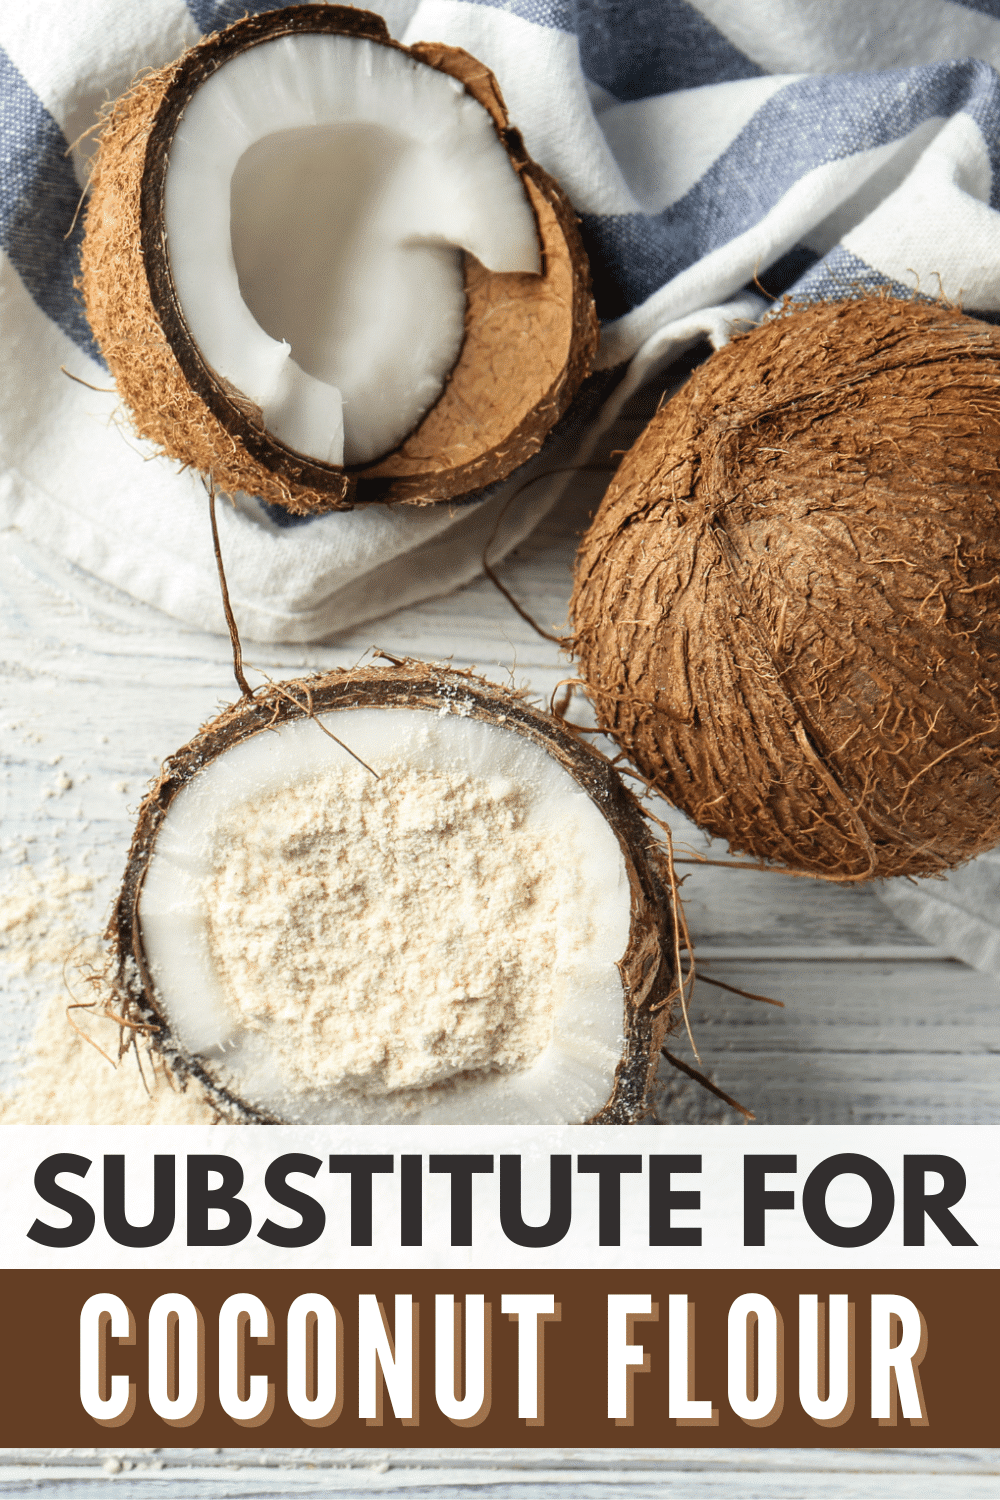 Substitute for coconut flour.